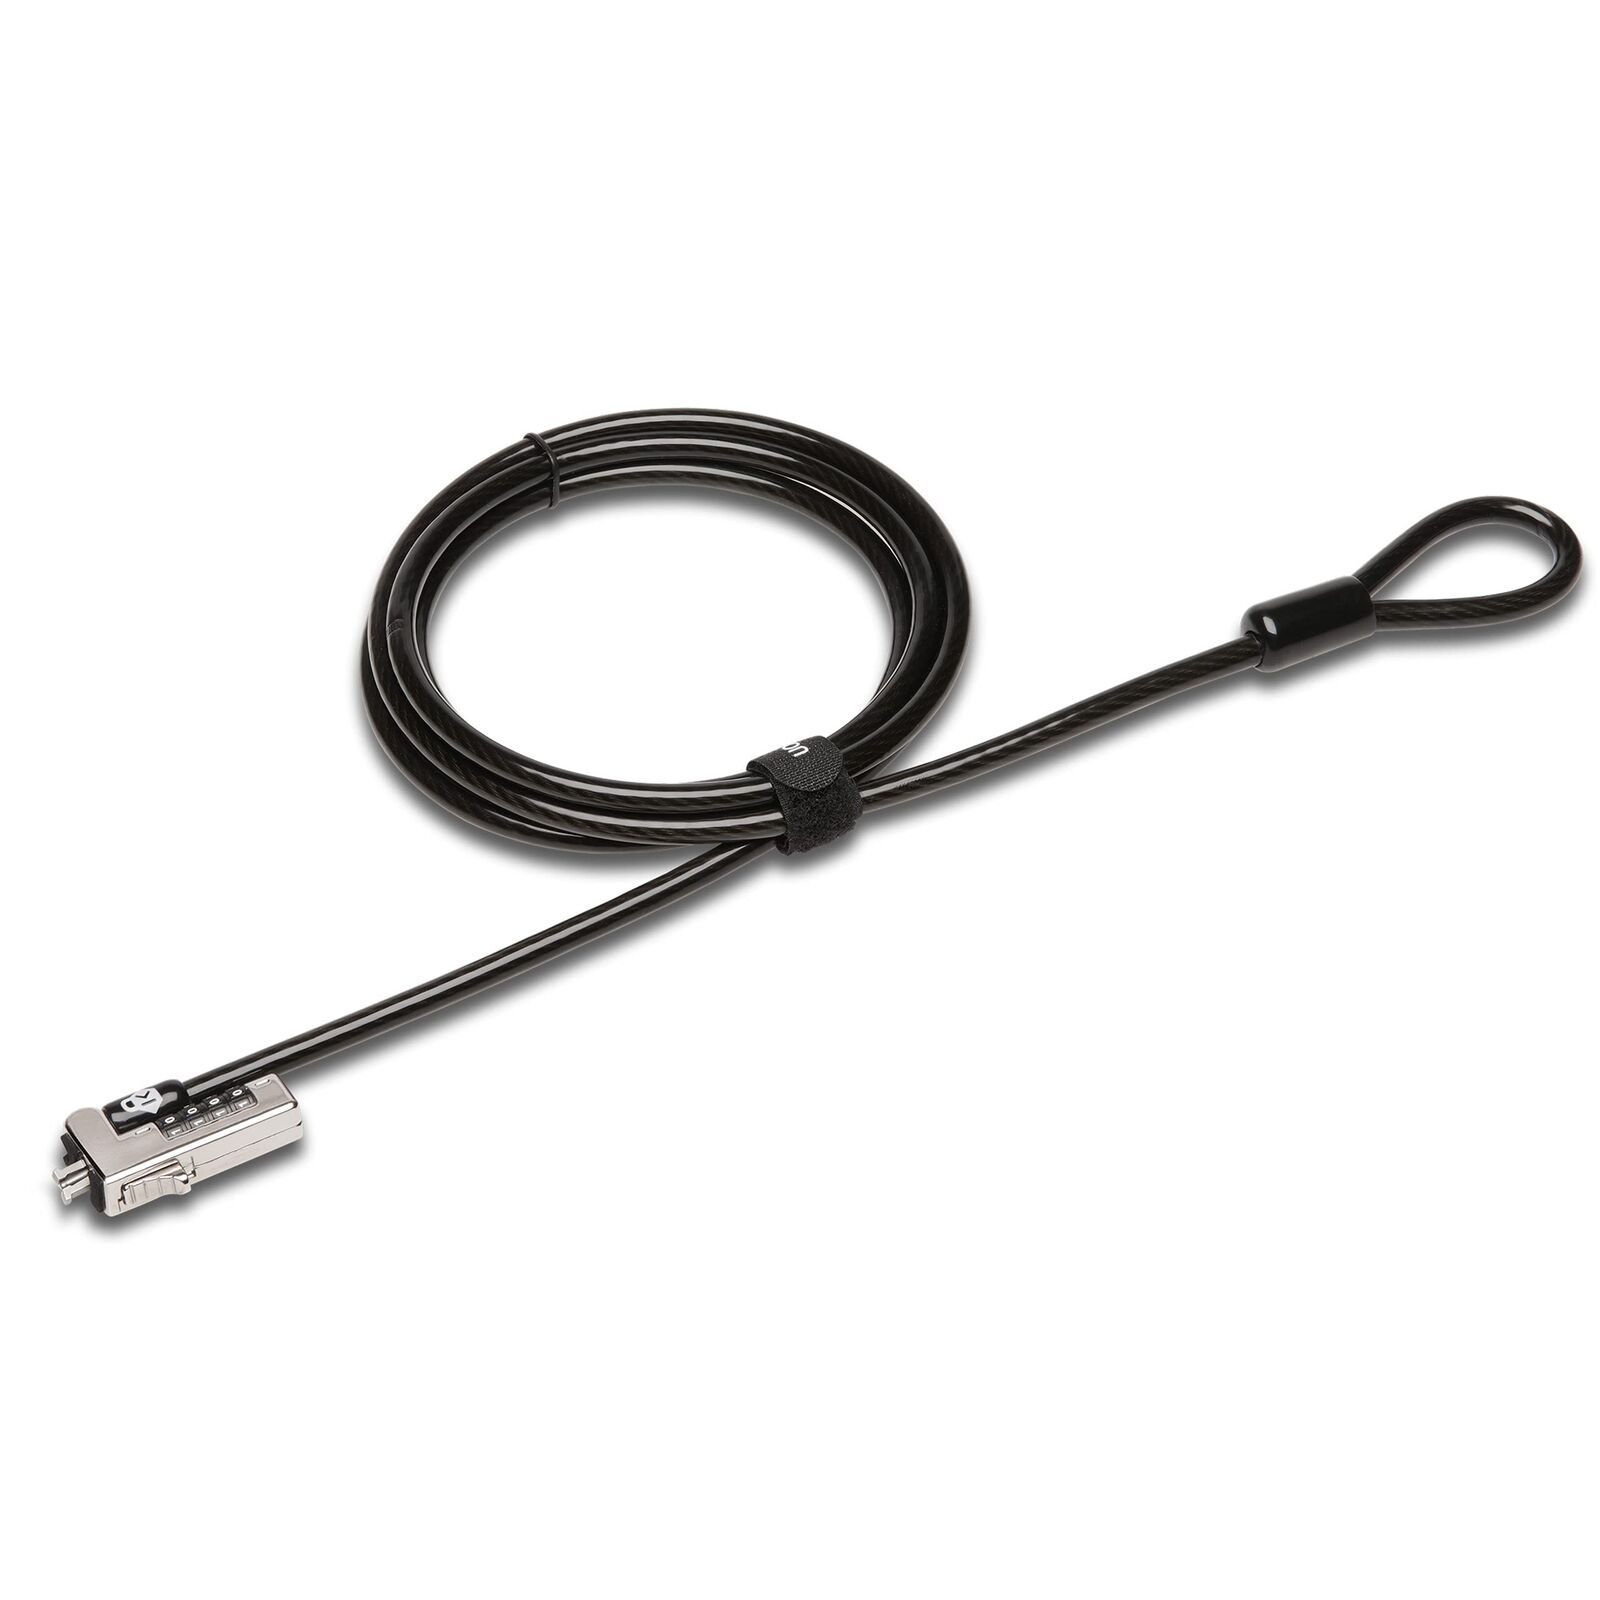 Kensington Slim NanoSaver Combination Ultra Cable Lock, Extra Thick Premium Lock